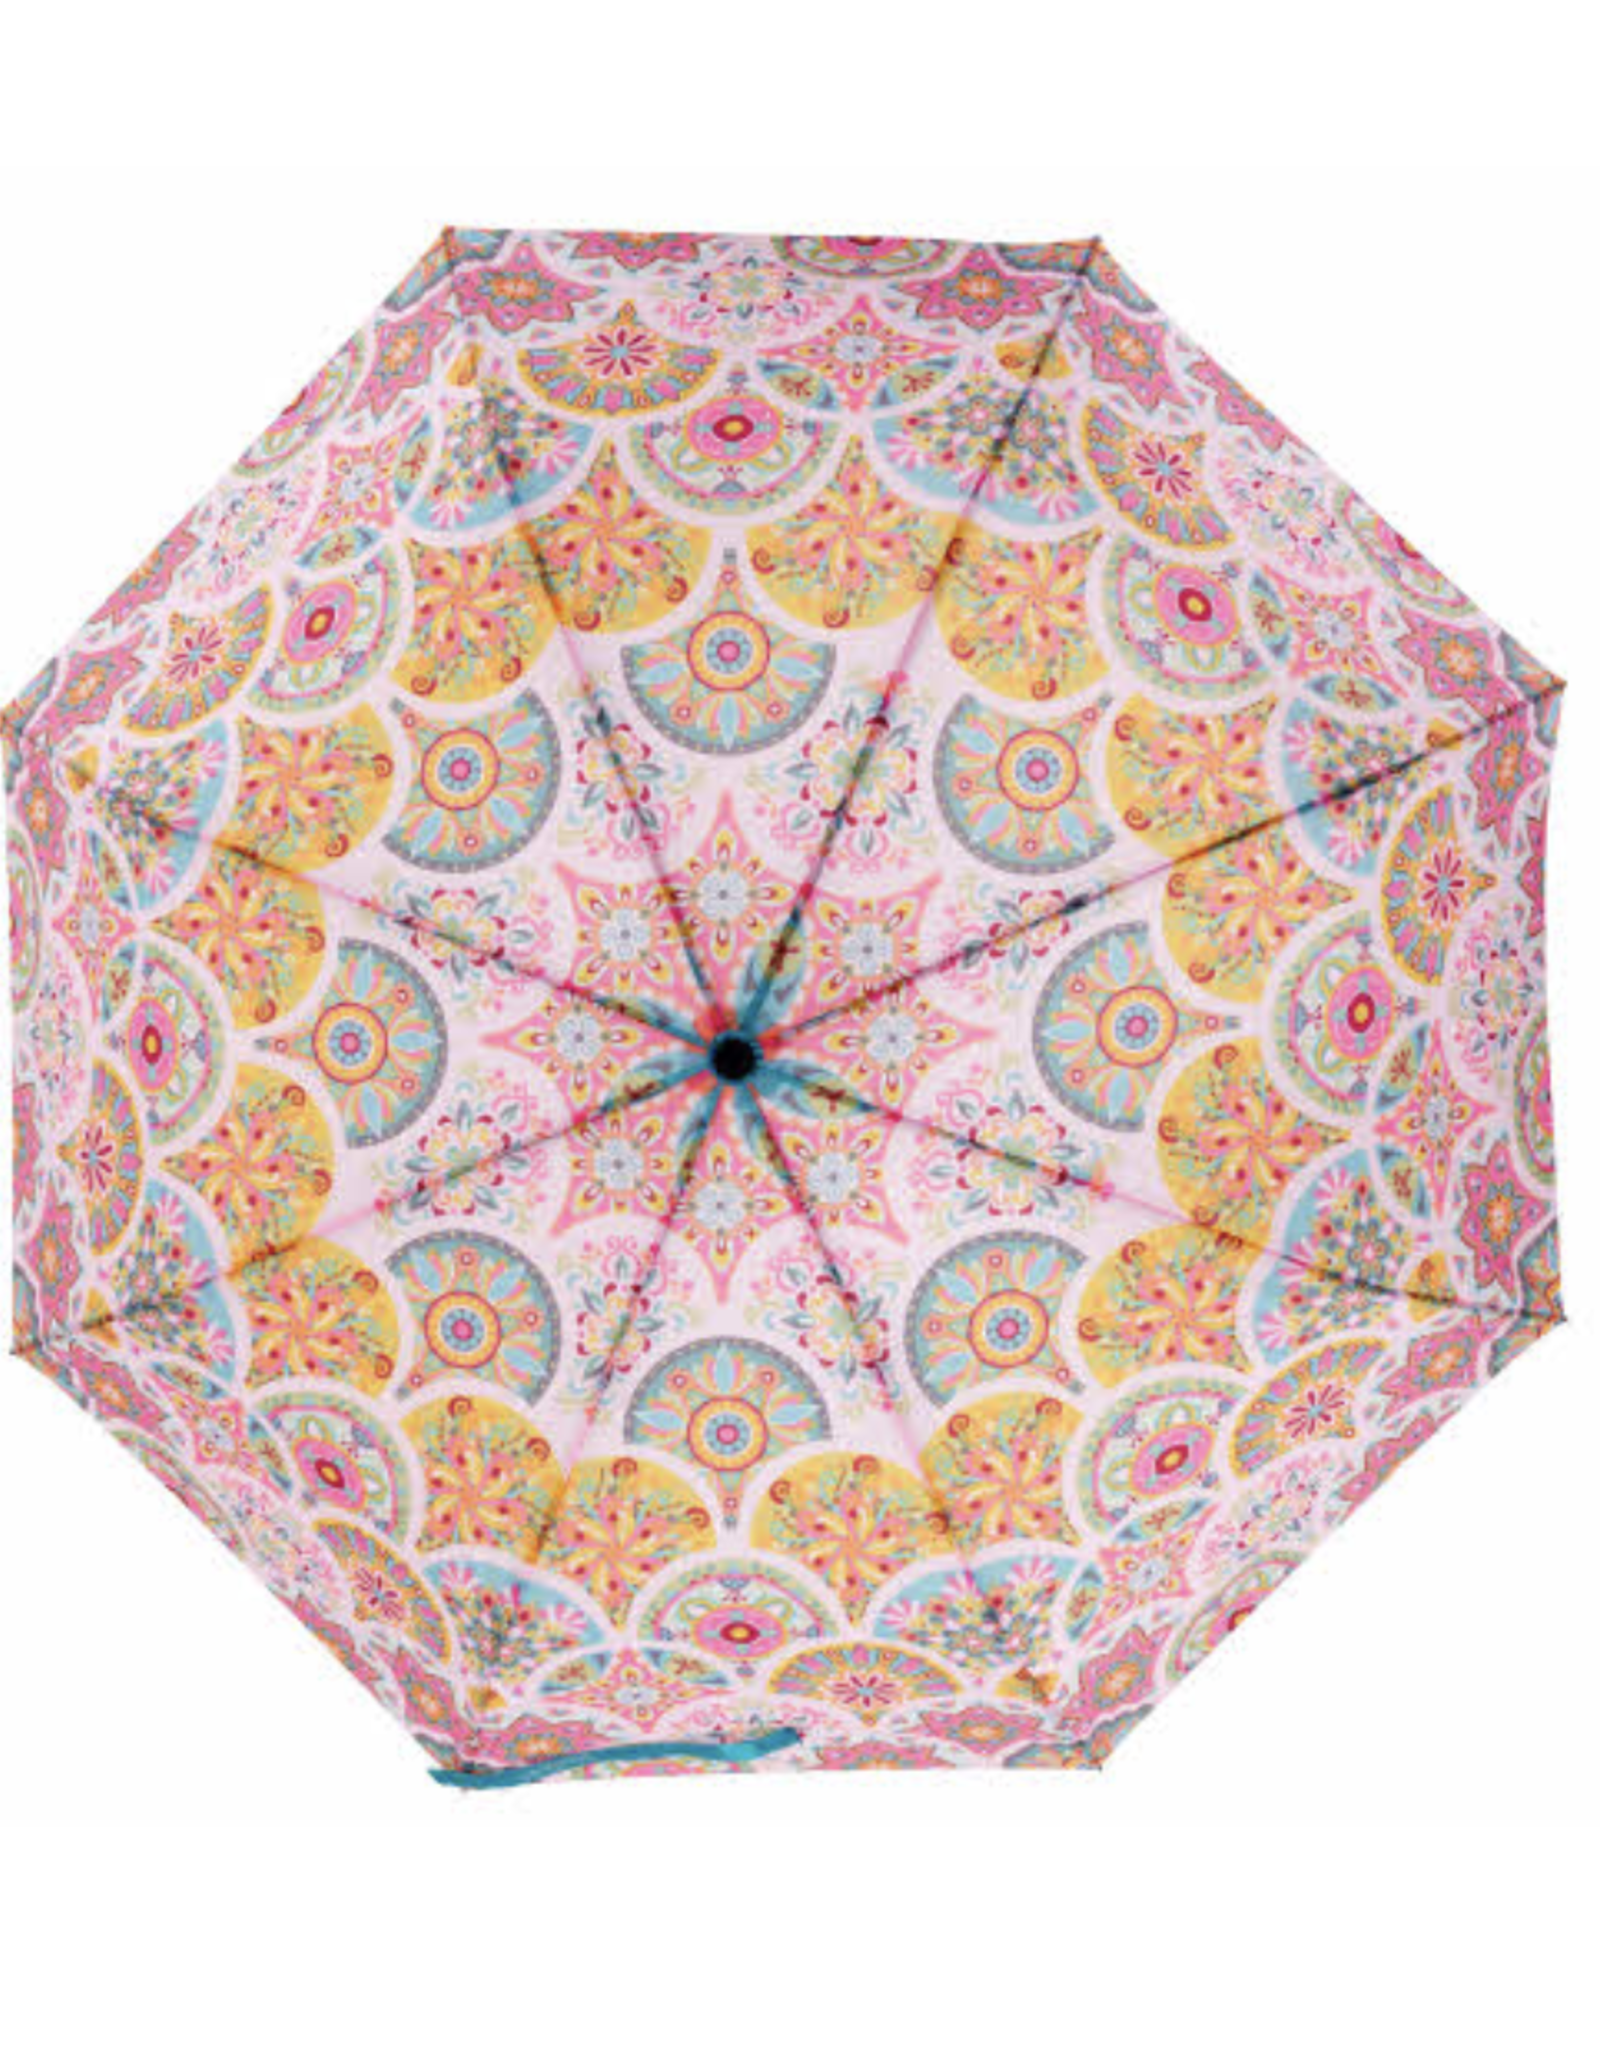 Travel Umbrella - Pink Medallion